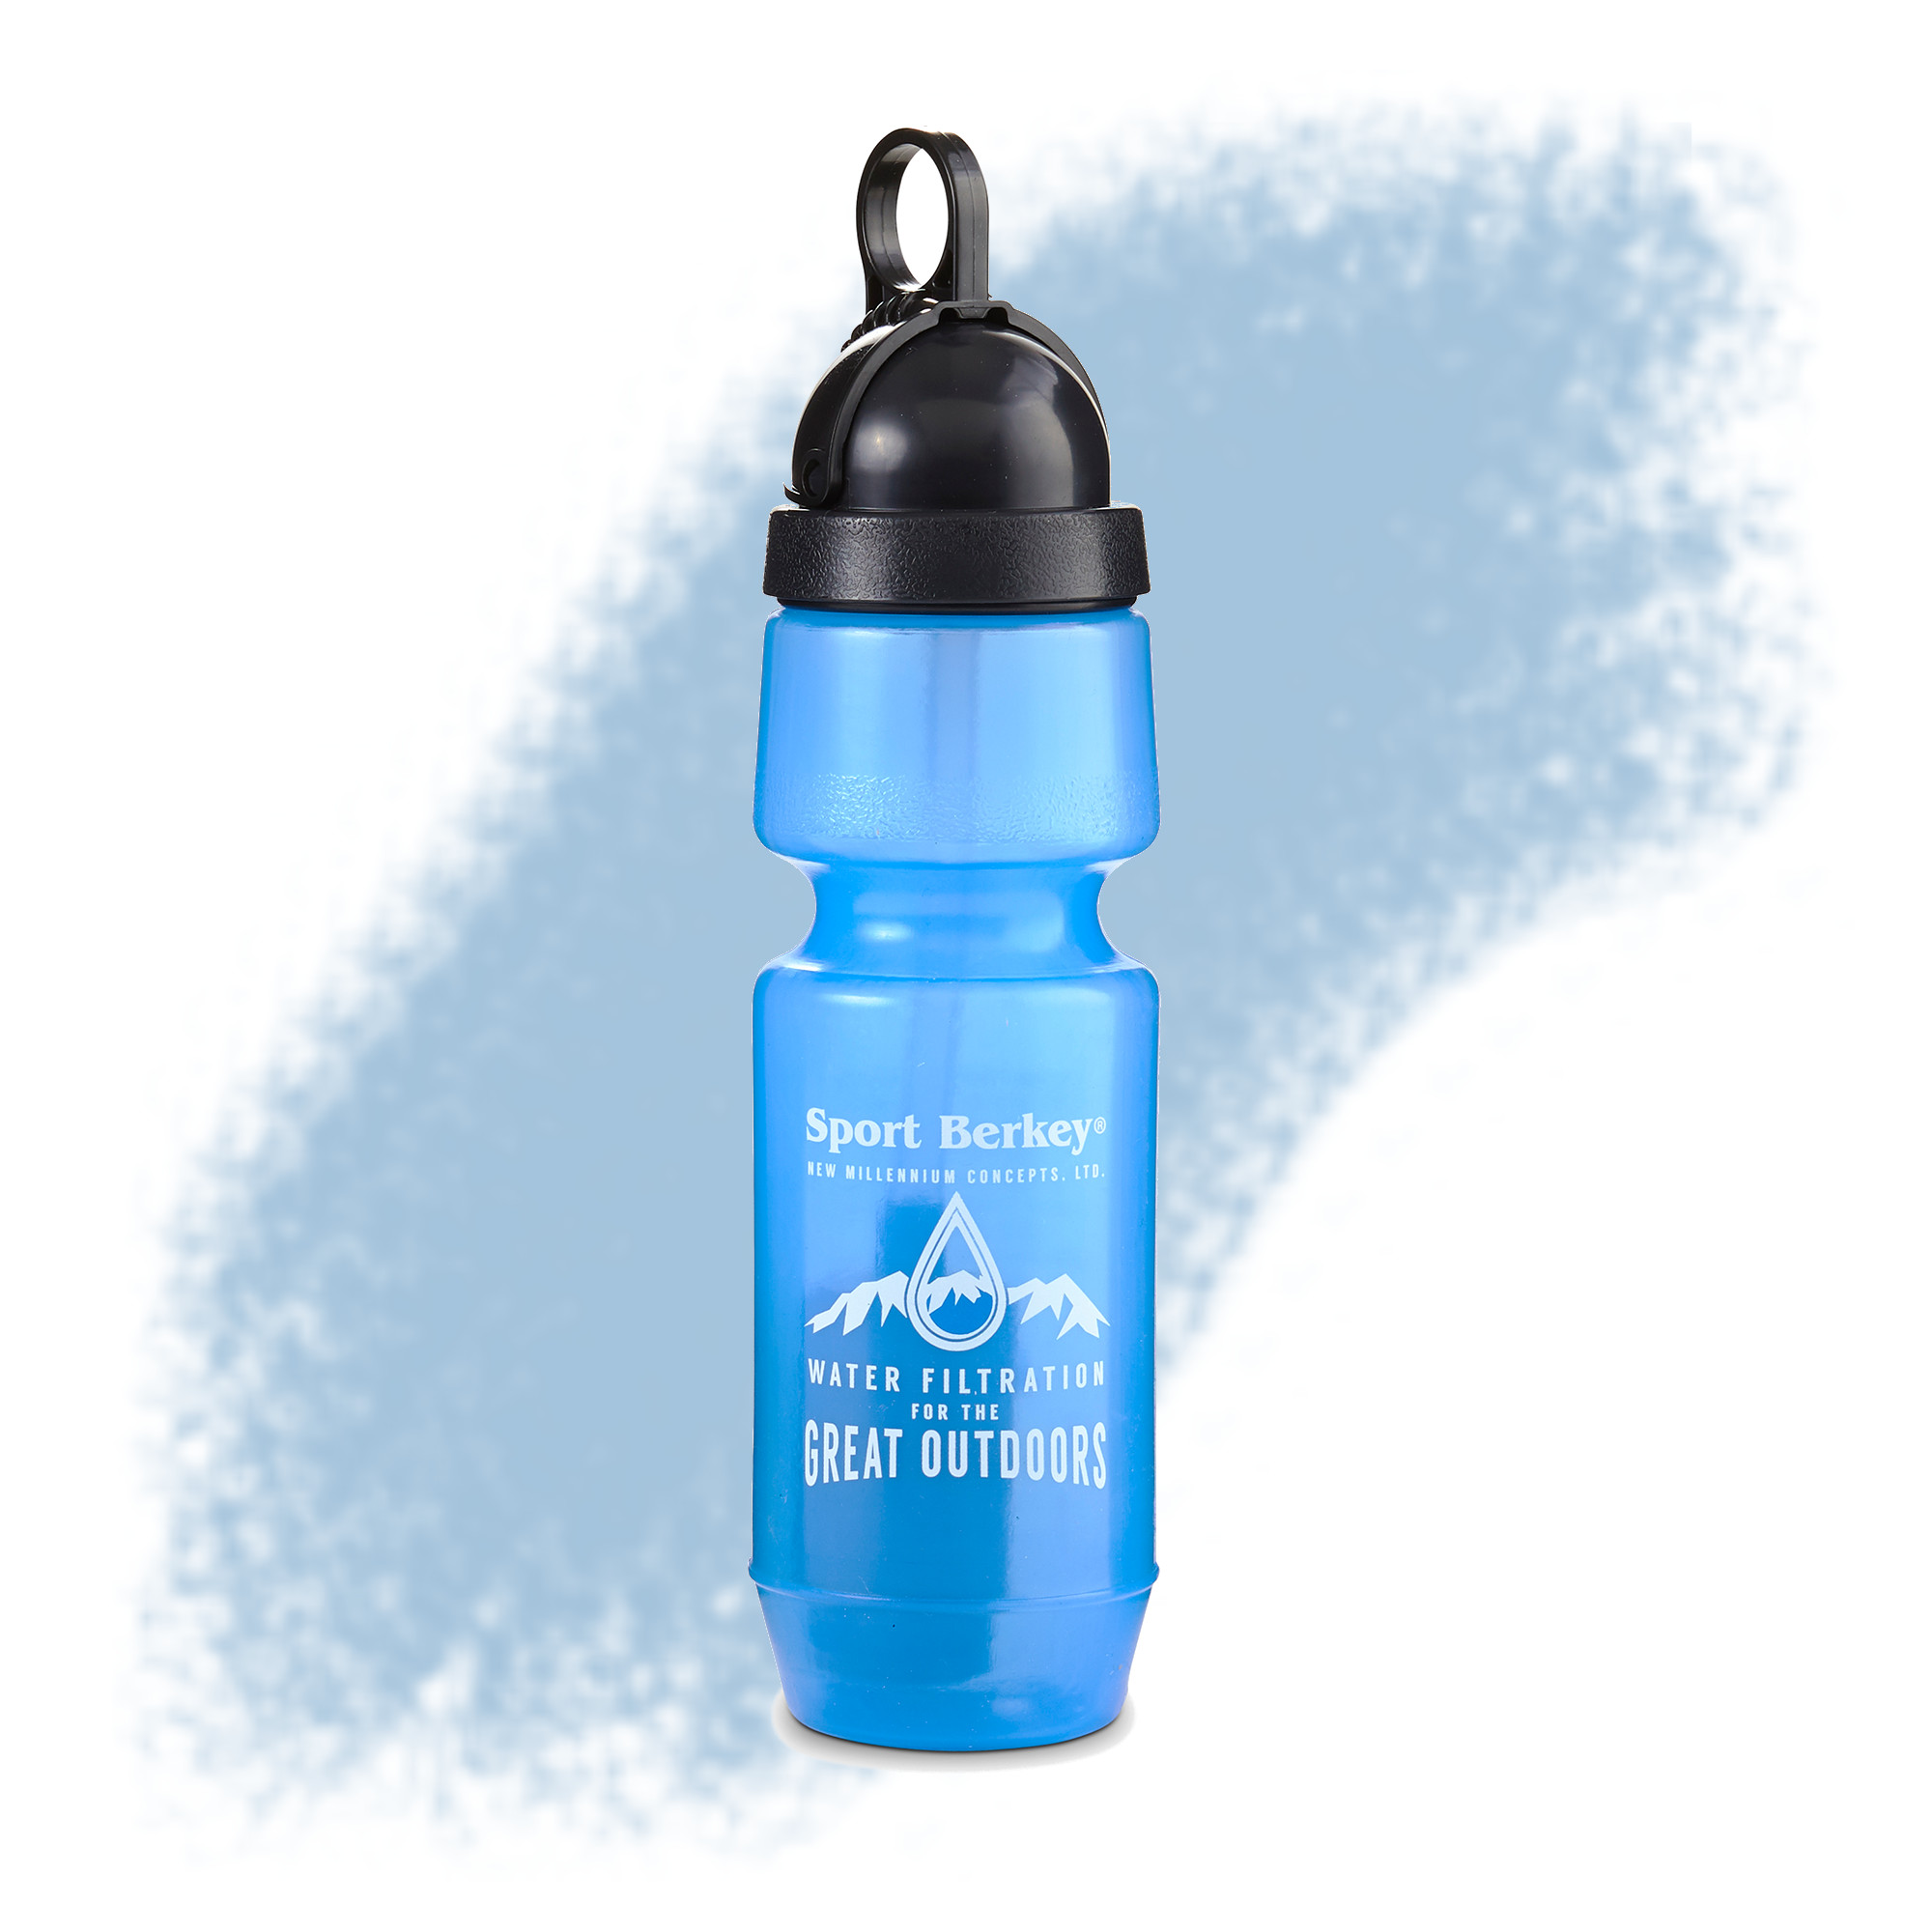 https://www.usaberkeyfilters.com/wp-content/uploads/2012/05/USABerkeyFilters_Sport_Berkey_Water_Filter_bottle_blue_stripe.jpg